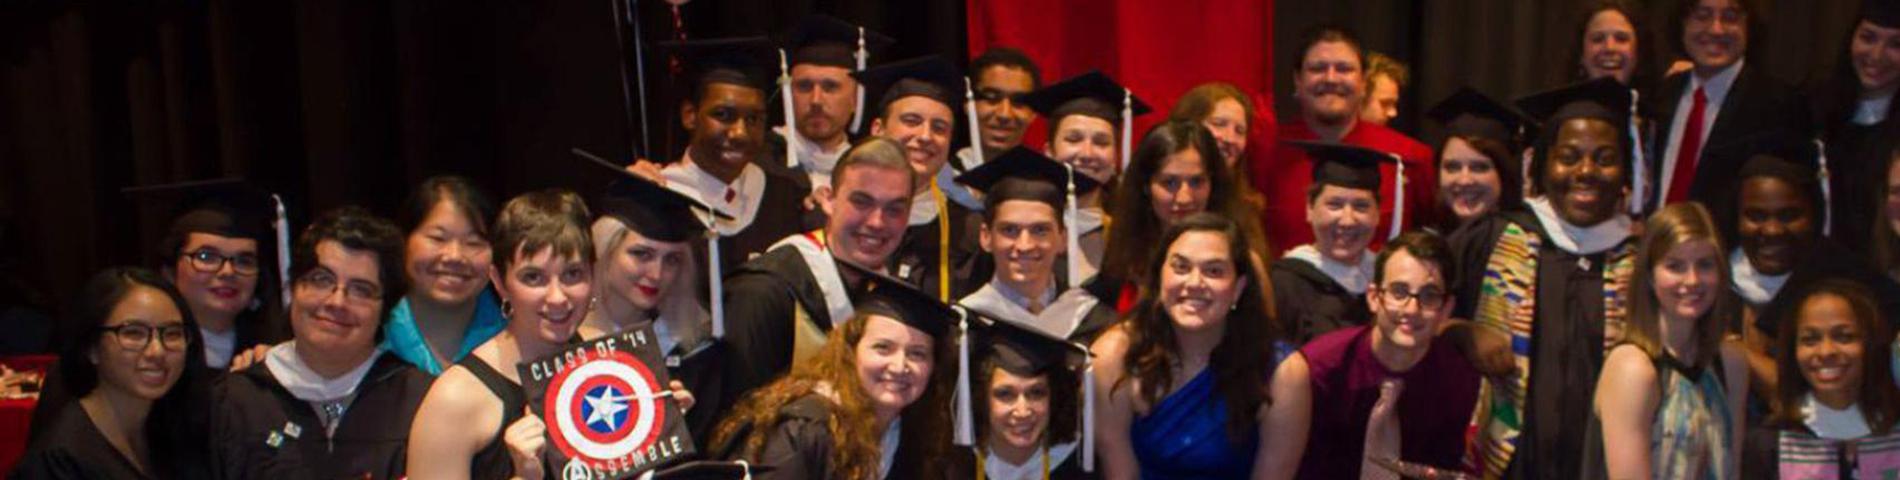 Theater, Film and Media Arts alumni are proud graduates of Temple University